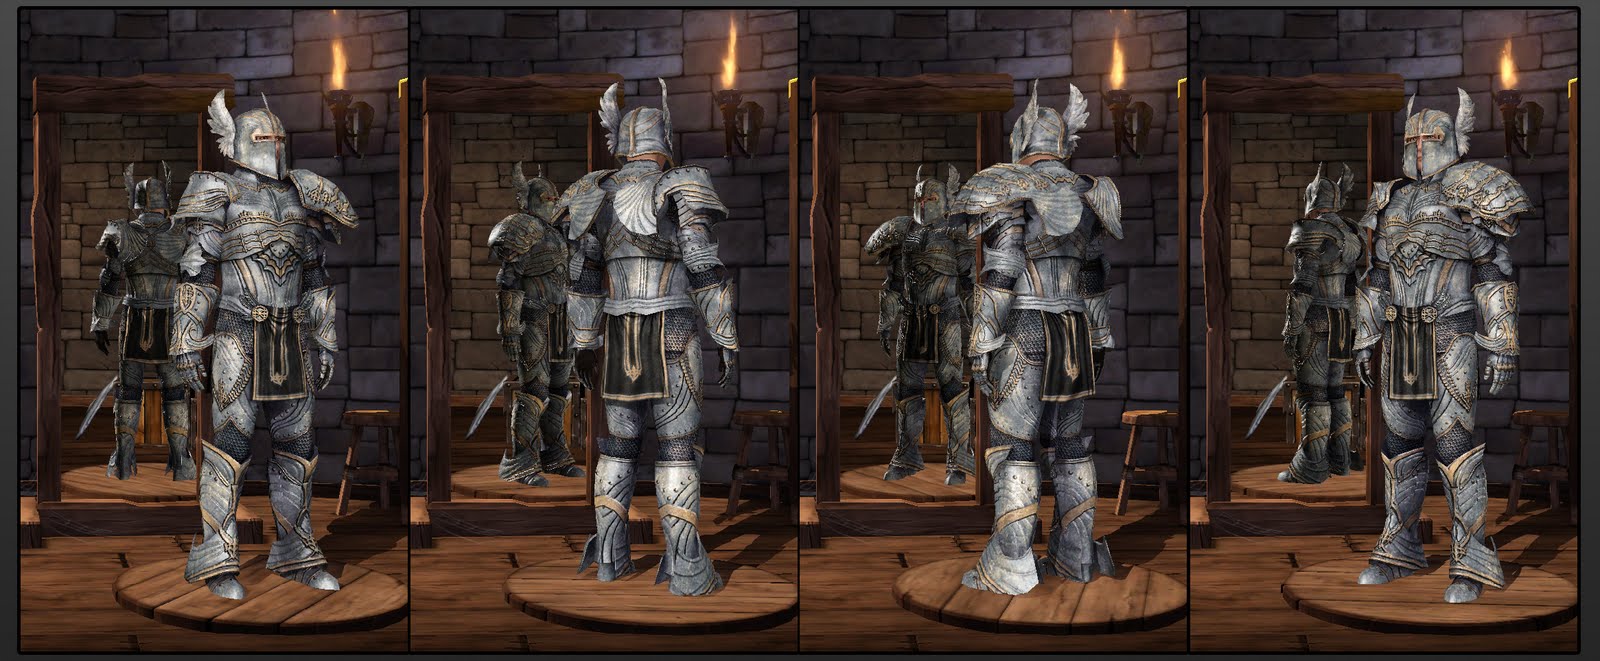 Sims Medieval Armor Cheat